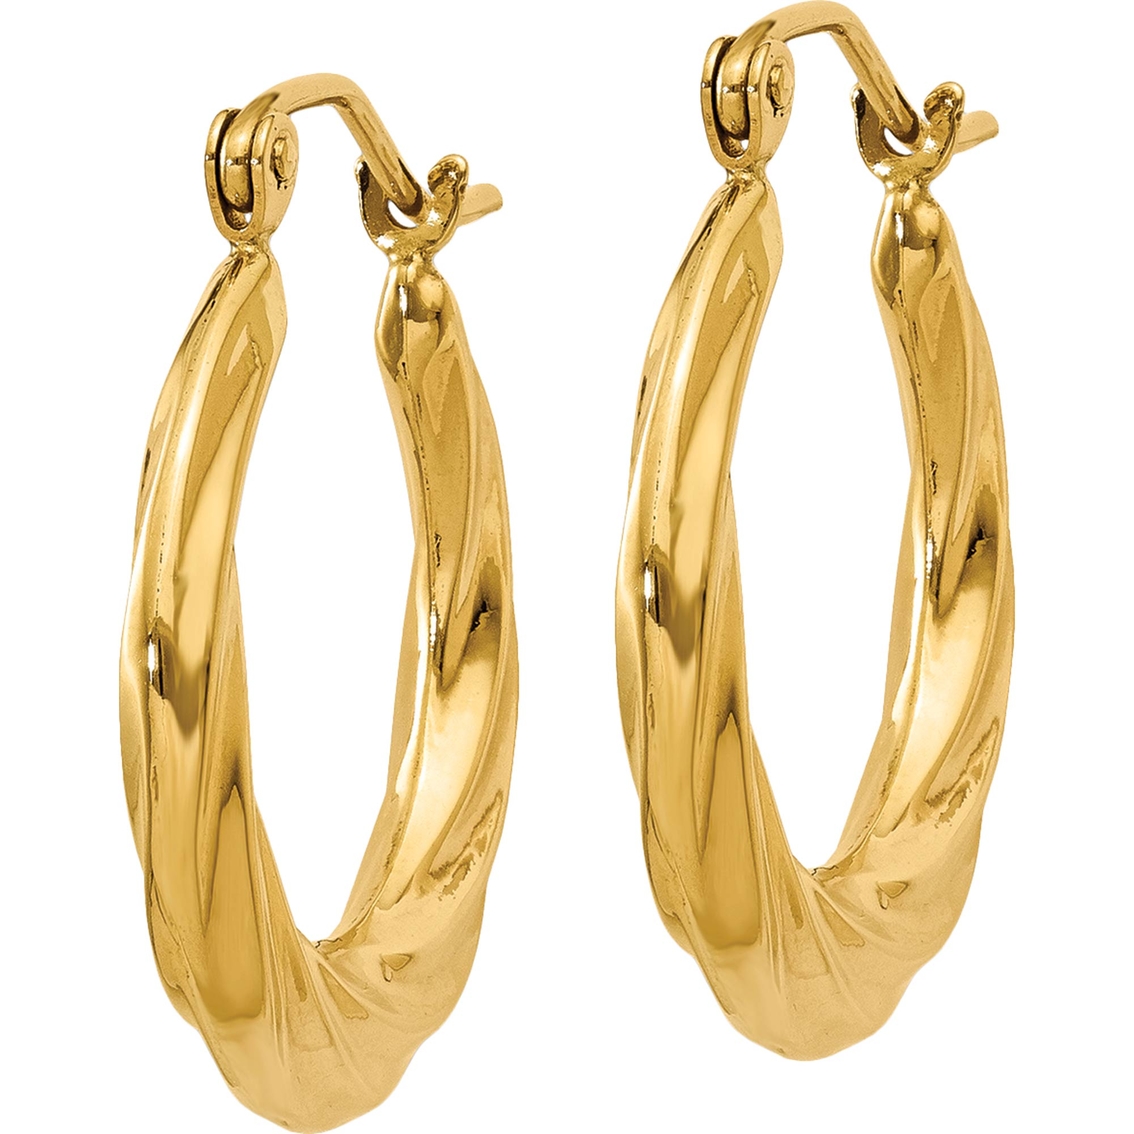 14K Yellow Gold Twisted Hoop Earrings - Image 2 of 2